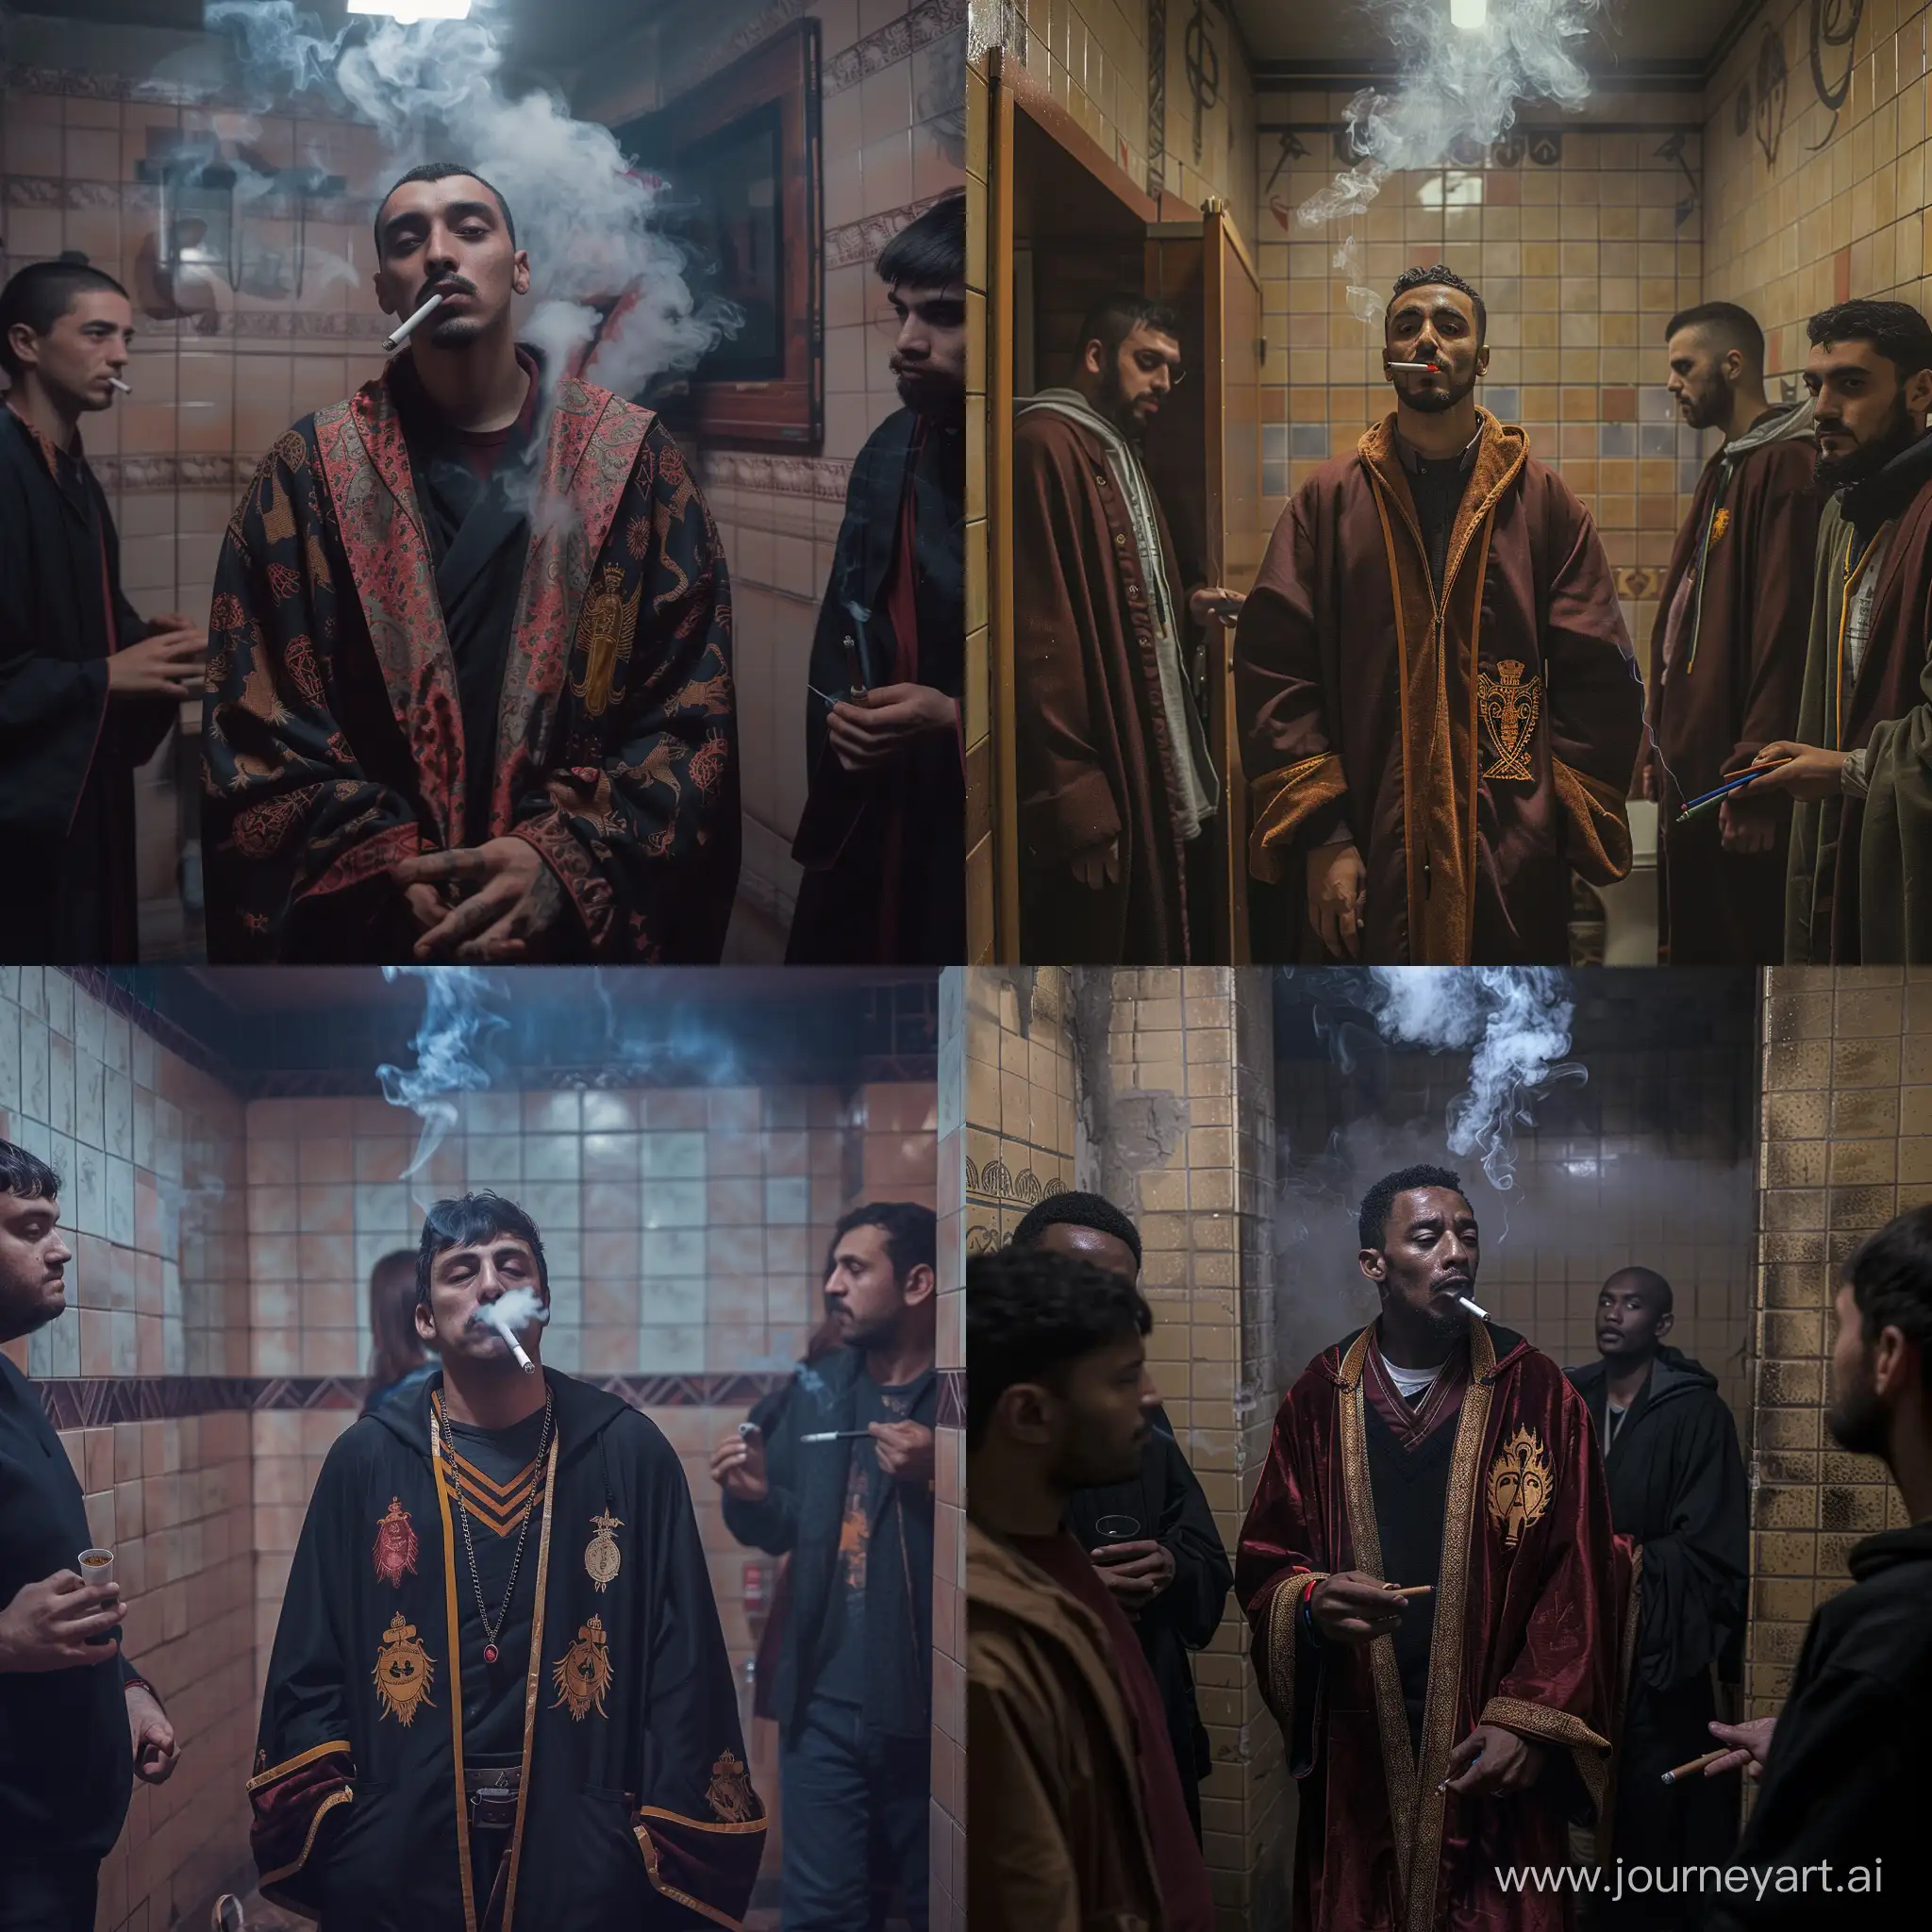 Dagestani-Man-in-Gryffindor-Robe-Smoking-with-Friends-at-Hogwarts-Bathroom